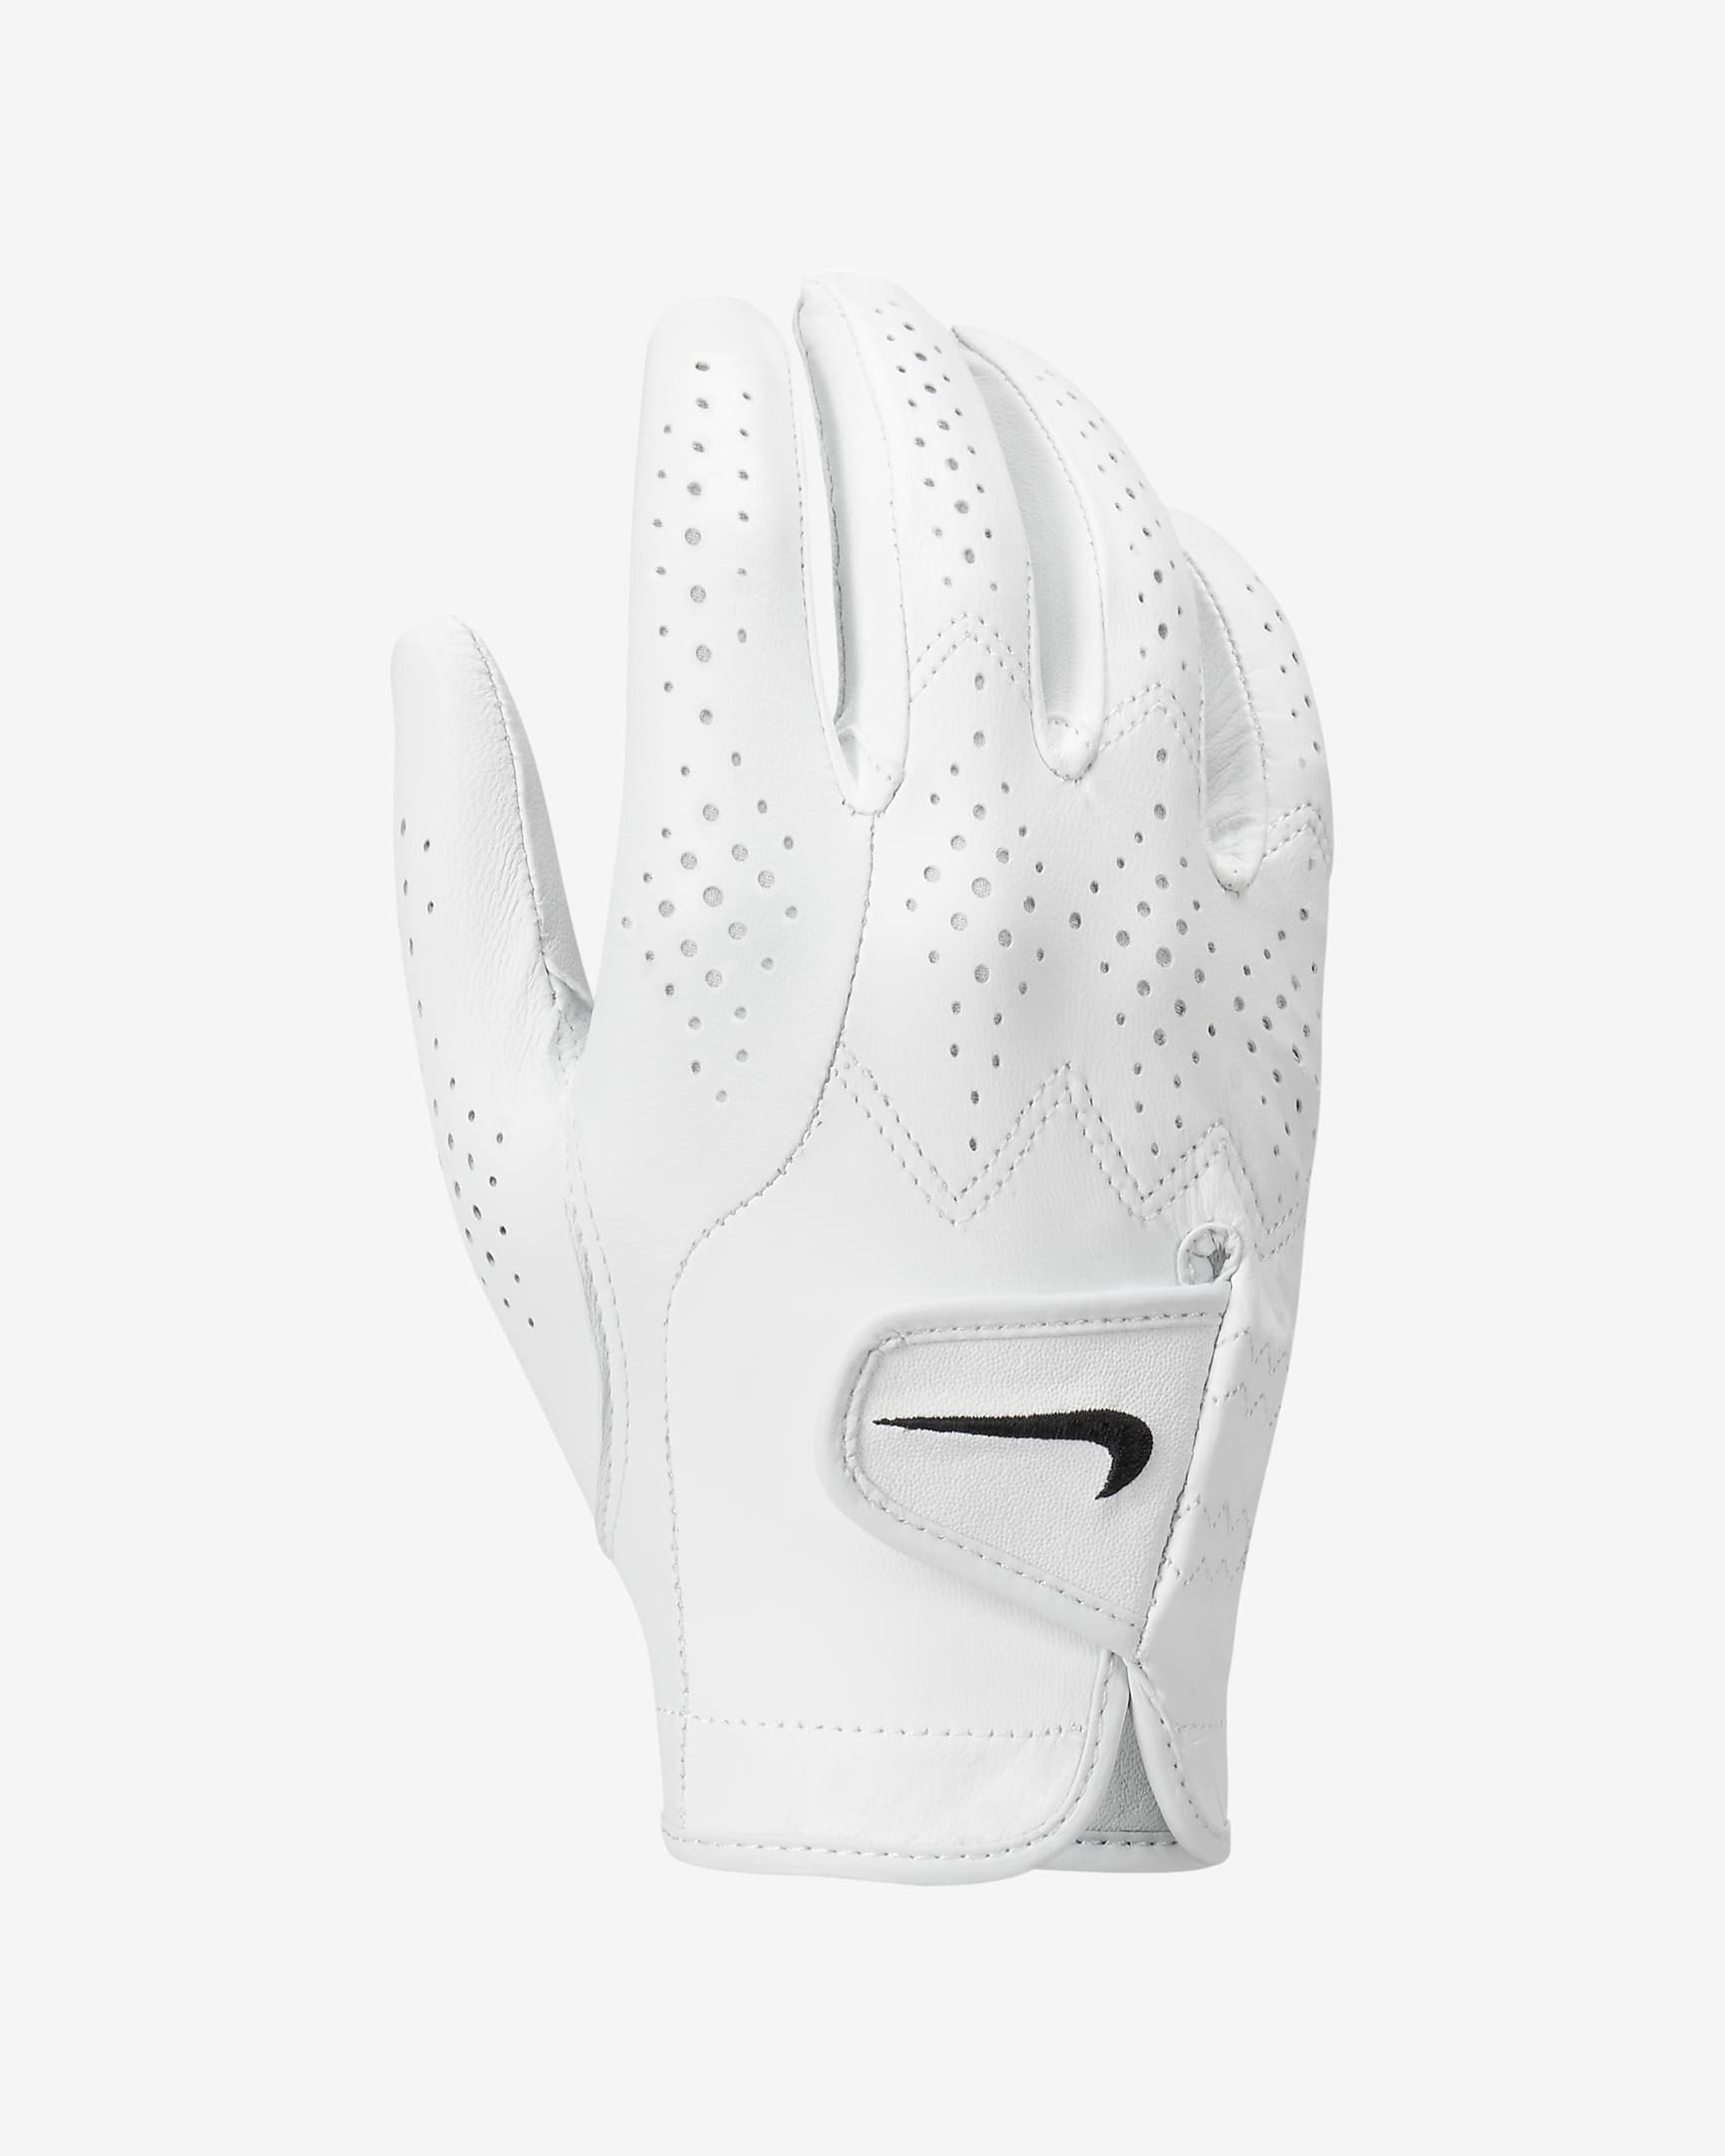 Nike Tour Classic 4 Men's Golf Glove (Right Hand). Nike.com